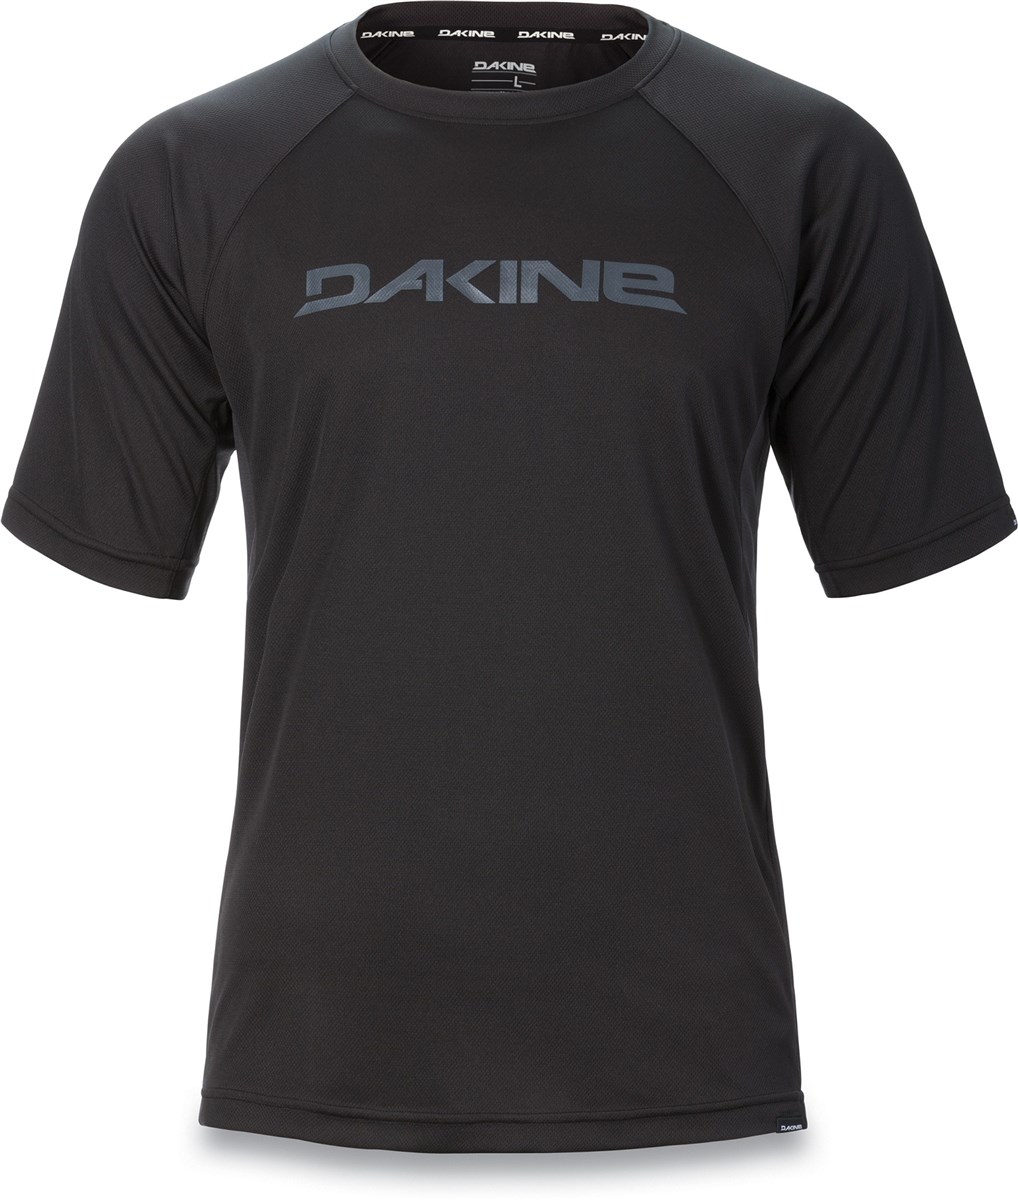 Dakine Rail Short Sleeve Jersey SS17 product image